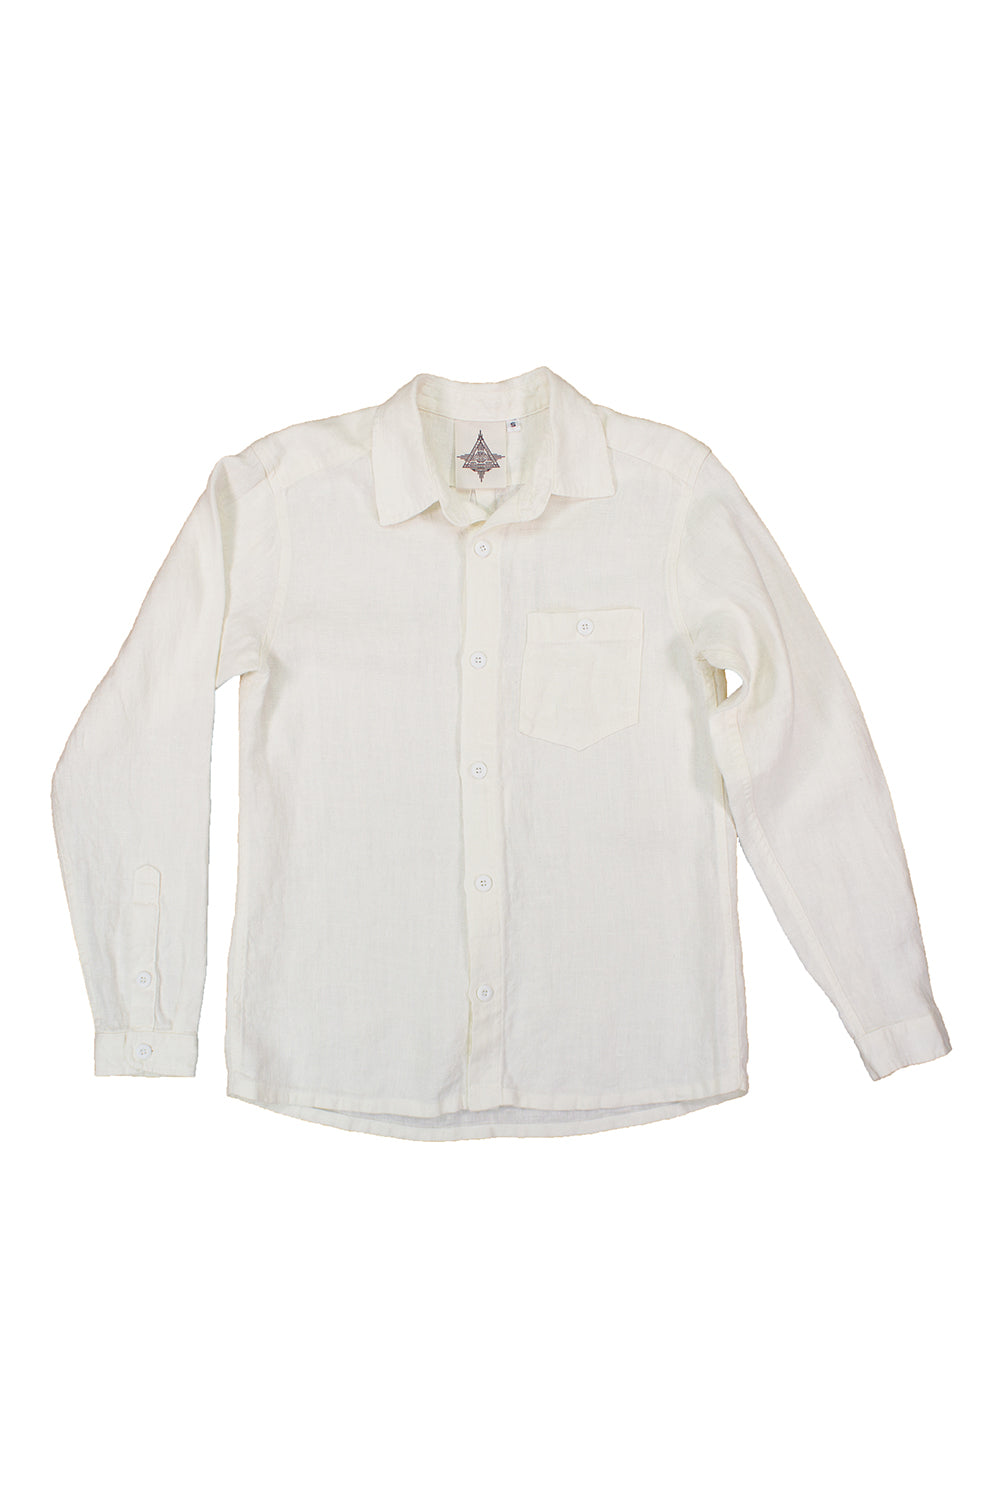 Lassen 100% Hemp Shirt | Jungmaven Hemp Clothing & Accessories / Color: Washed White